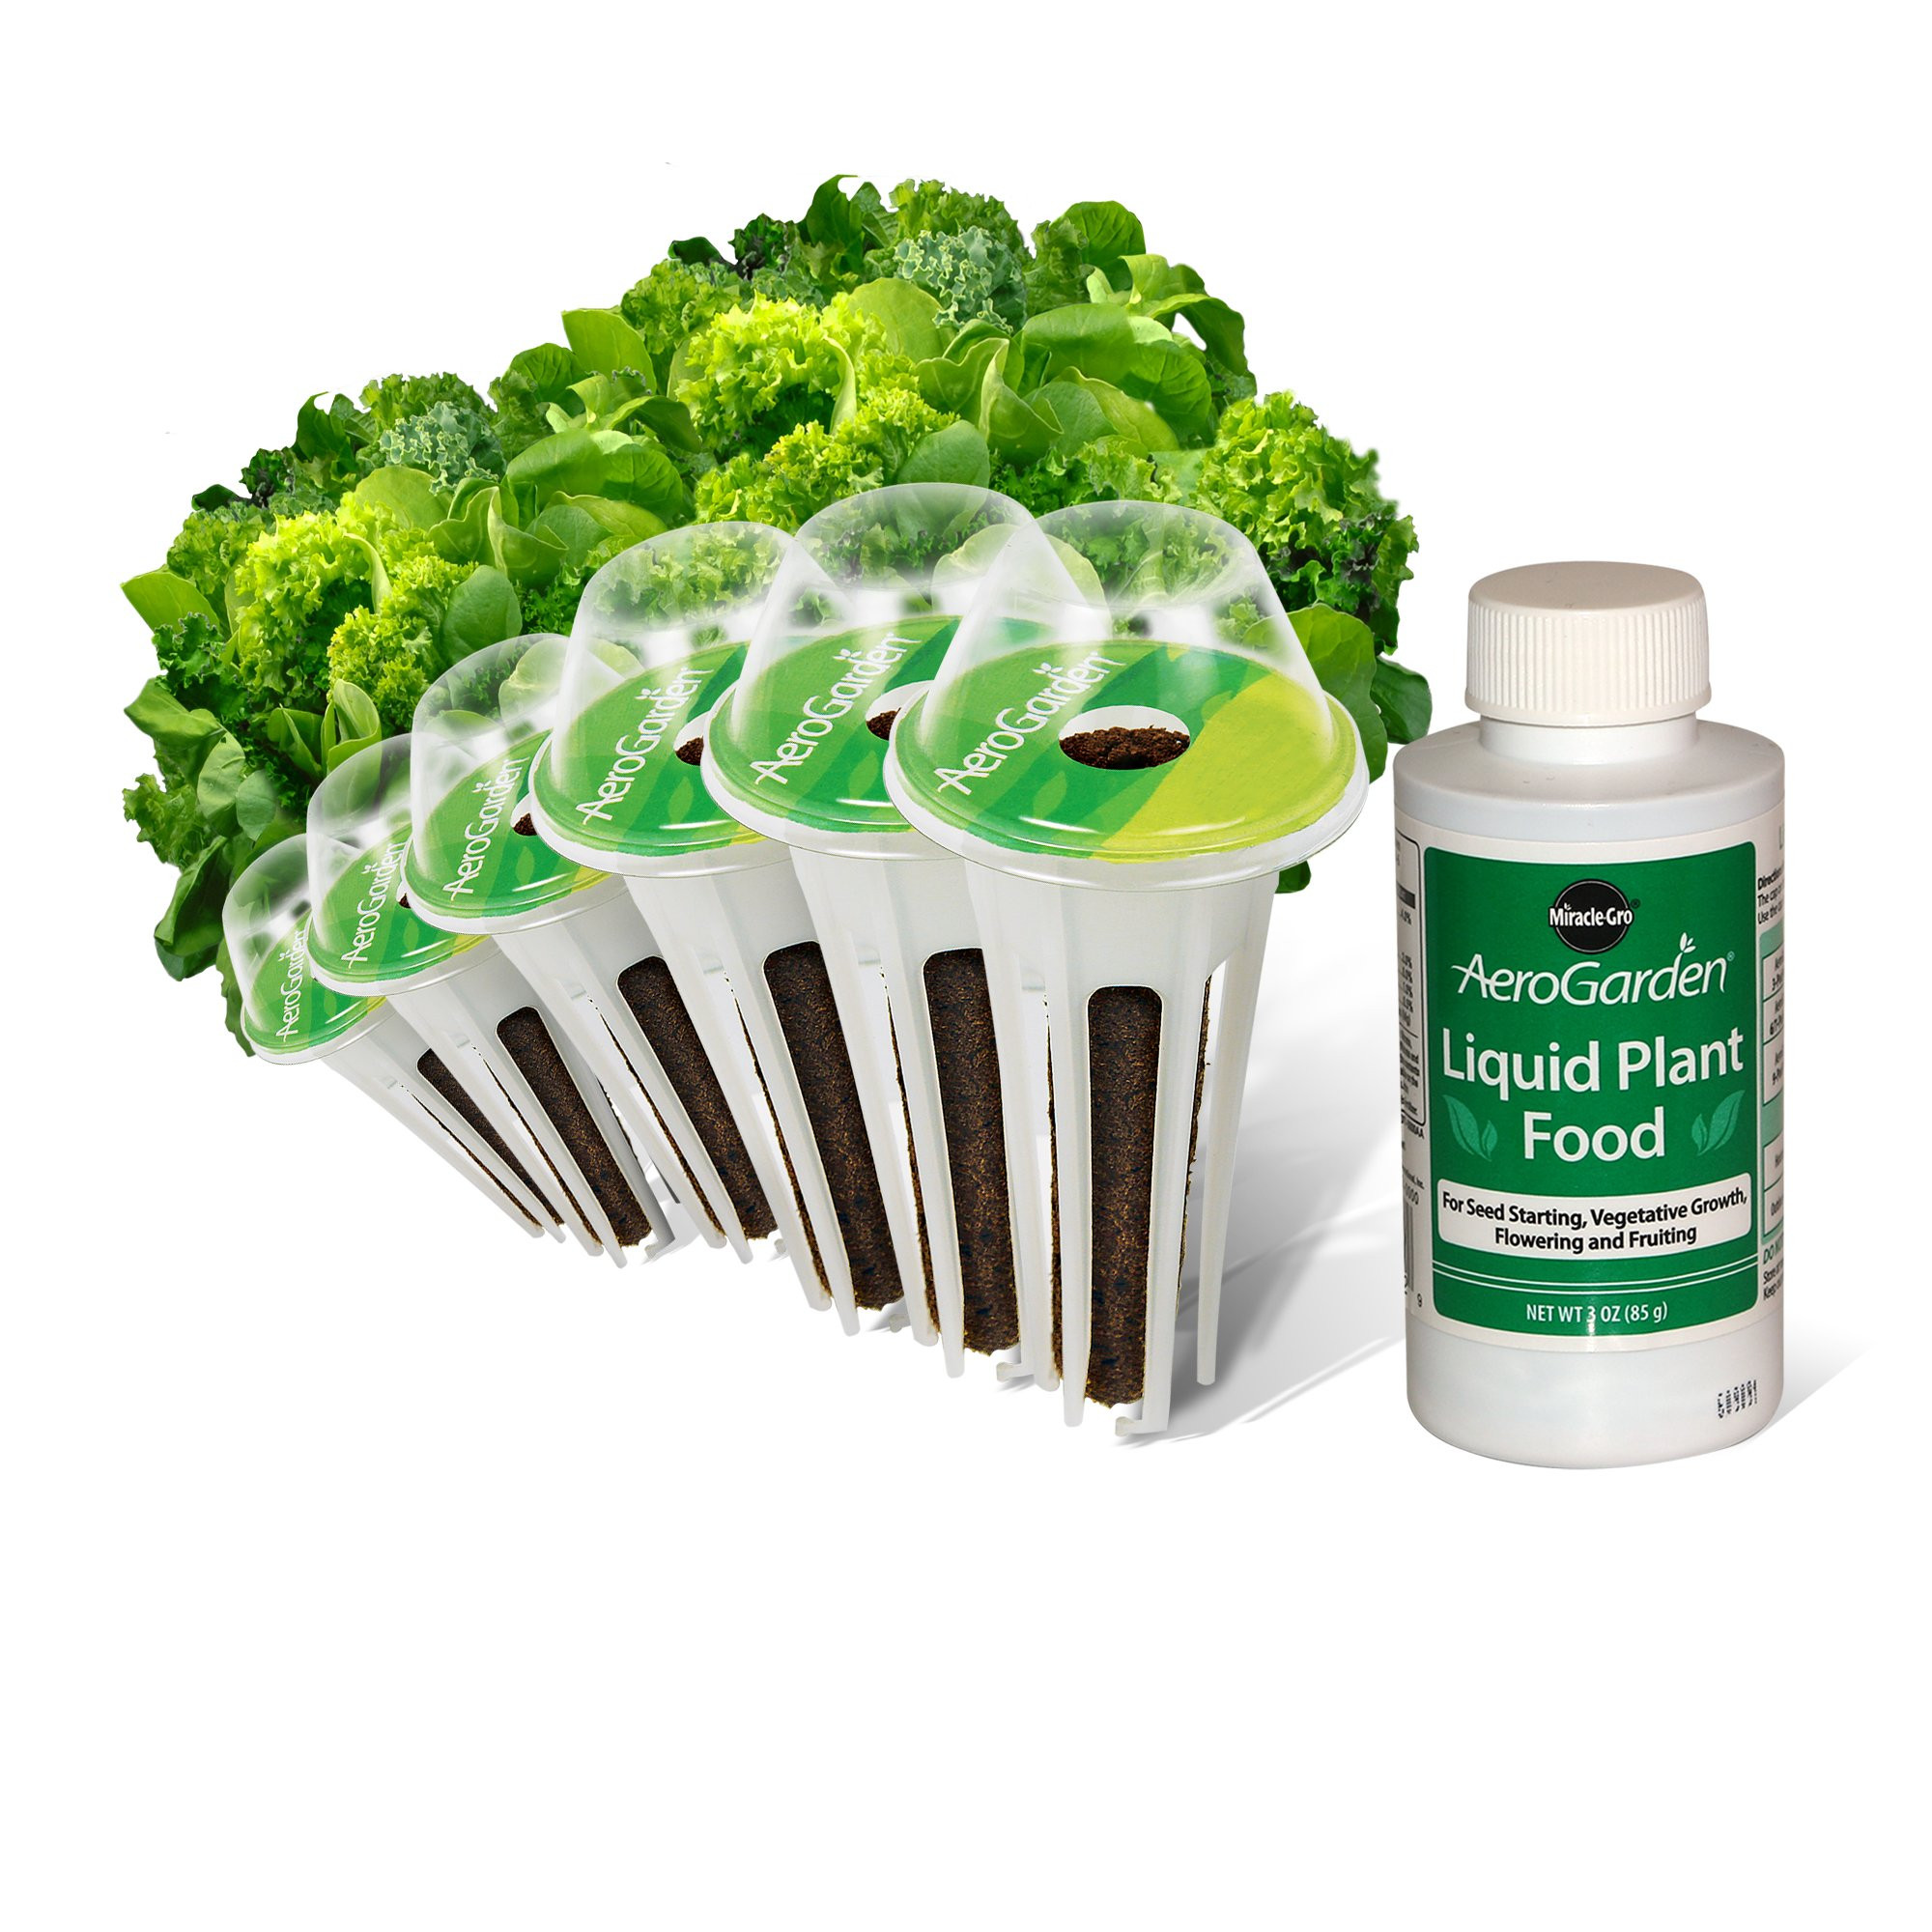 Best ideas about Aerogarden Pods DIY
. Save or Pin AeroGarden Hydroponic Indoor Herb Garden Salad Greens Seed Now.